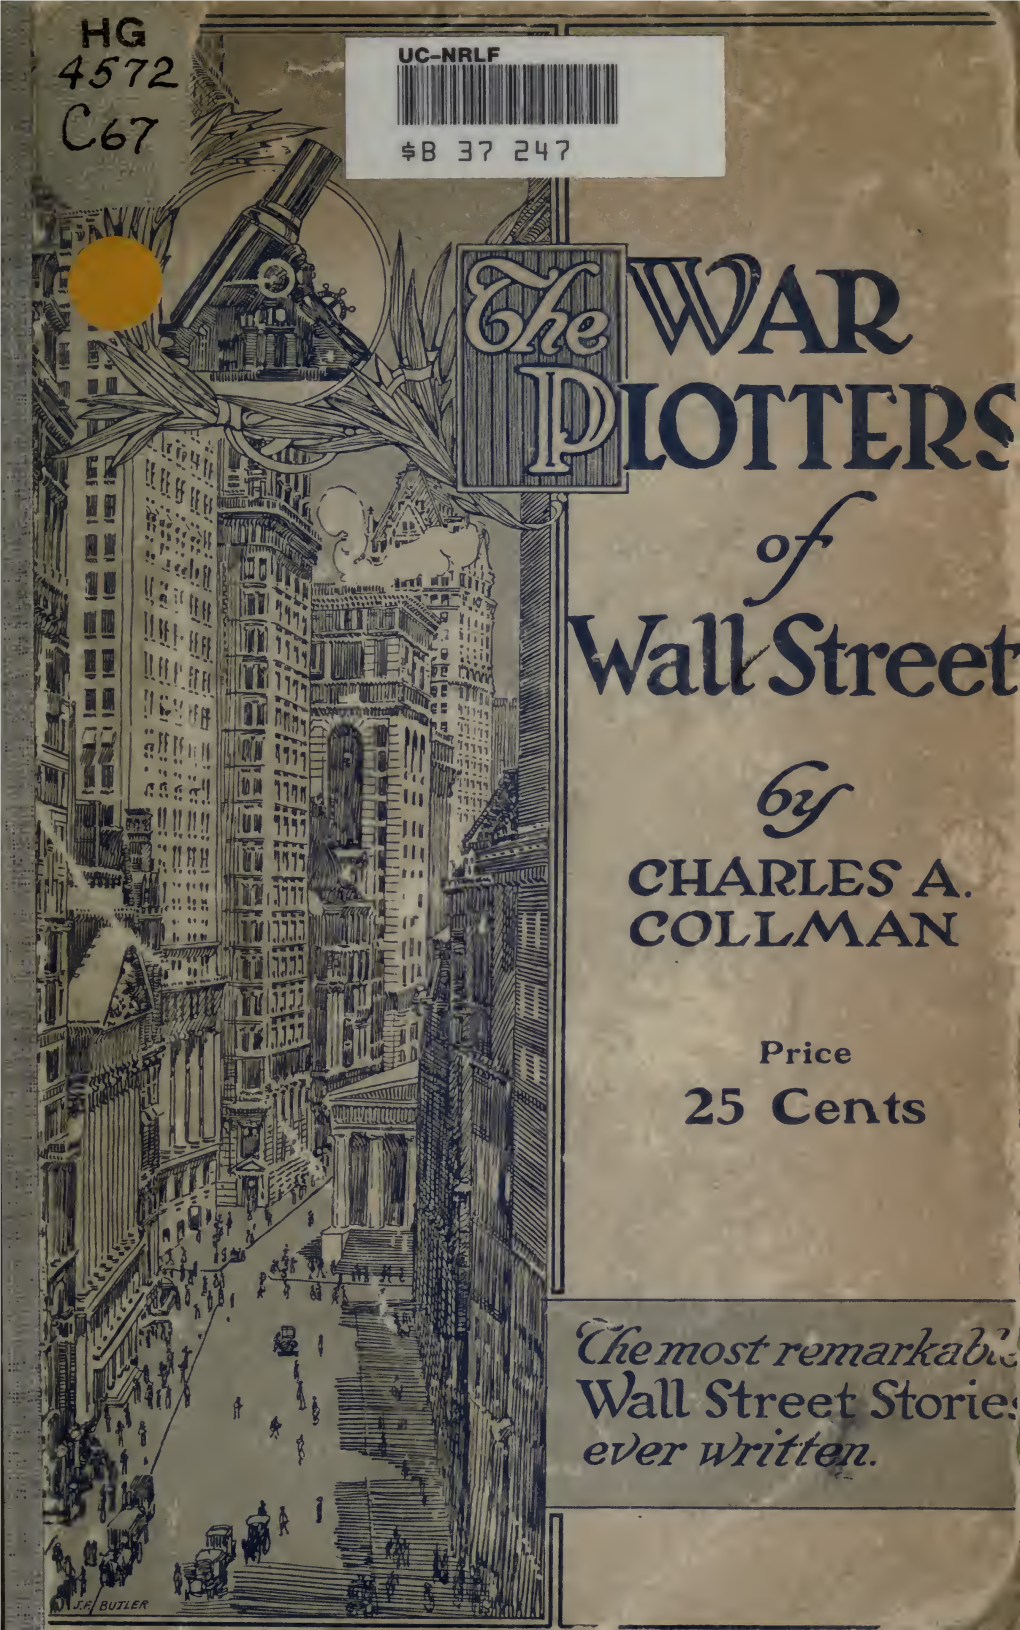 The War Plotters of Wall Street